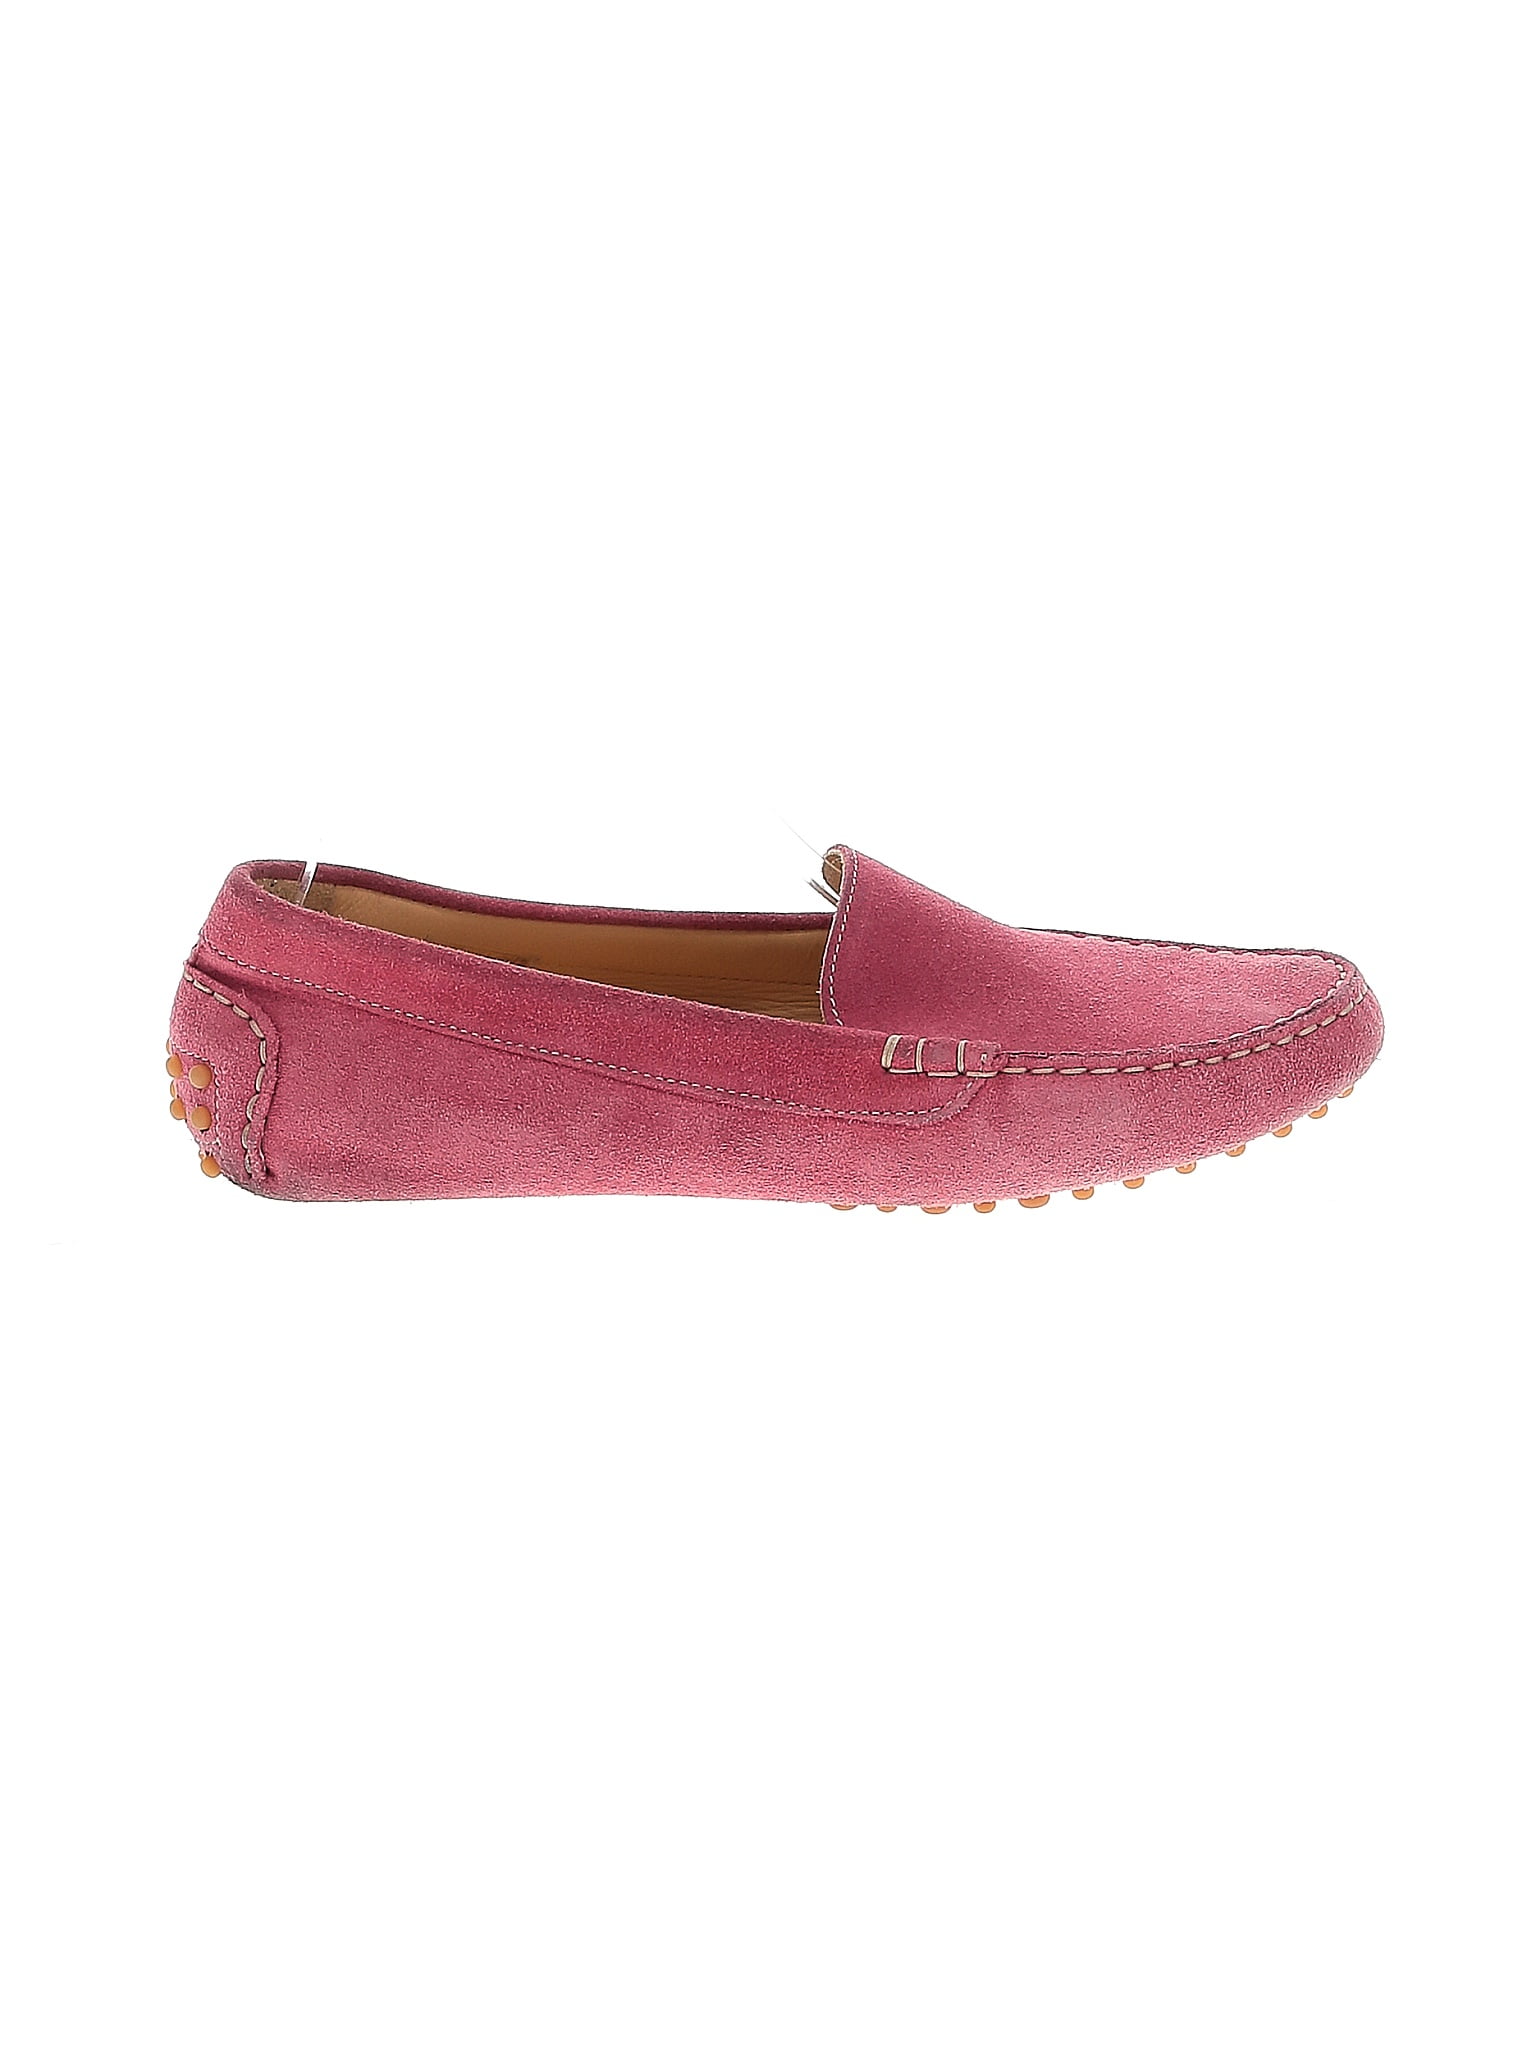 M. Gemi Solid Pink Flats Size 39.5 (EU) - 77% off | thredUP